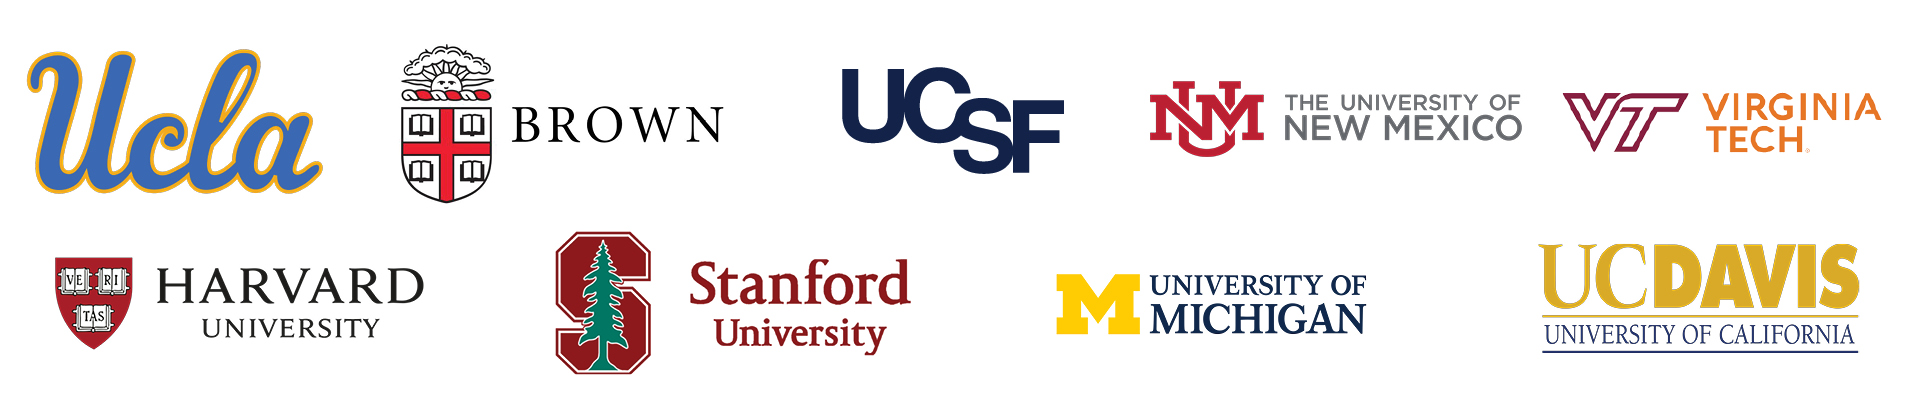 UCLA, Brown, UCSF, The University of New Mexico, Harvard, Stanford, University of Michigan, Virginia Tech, UC Davis logos